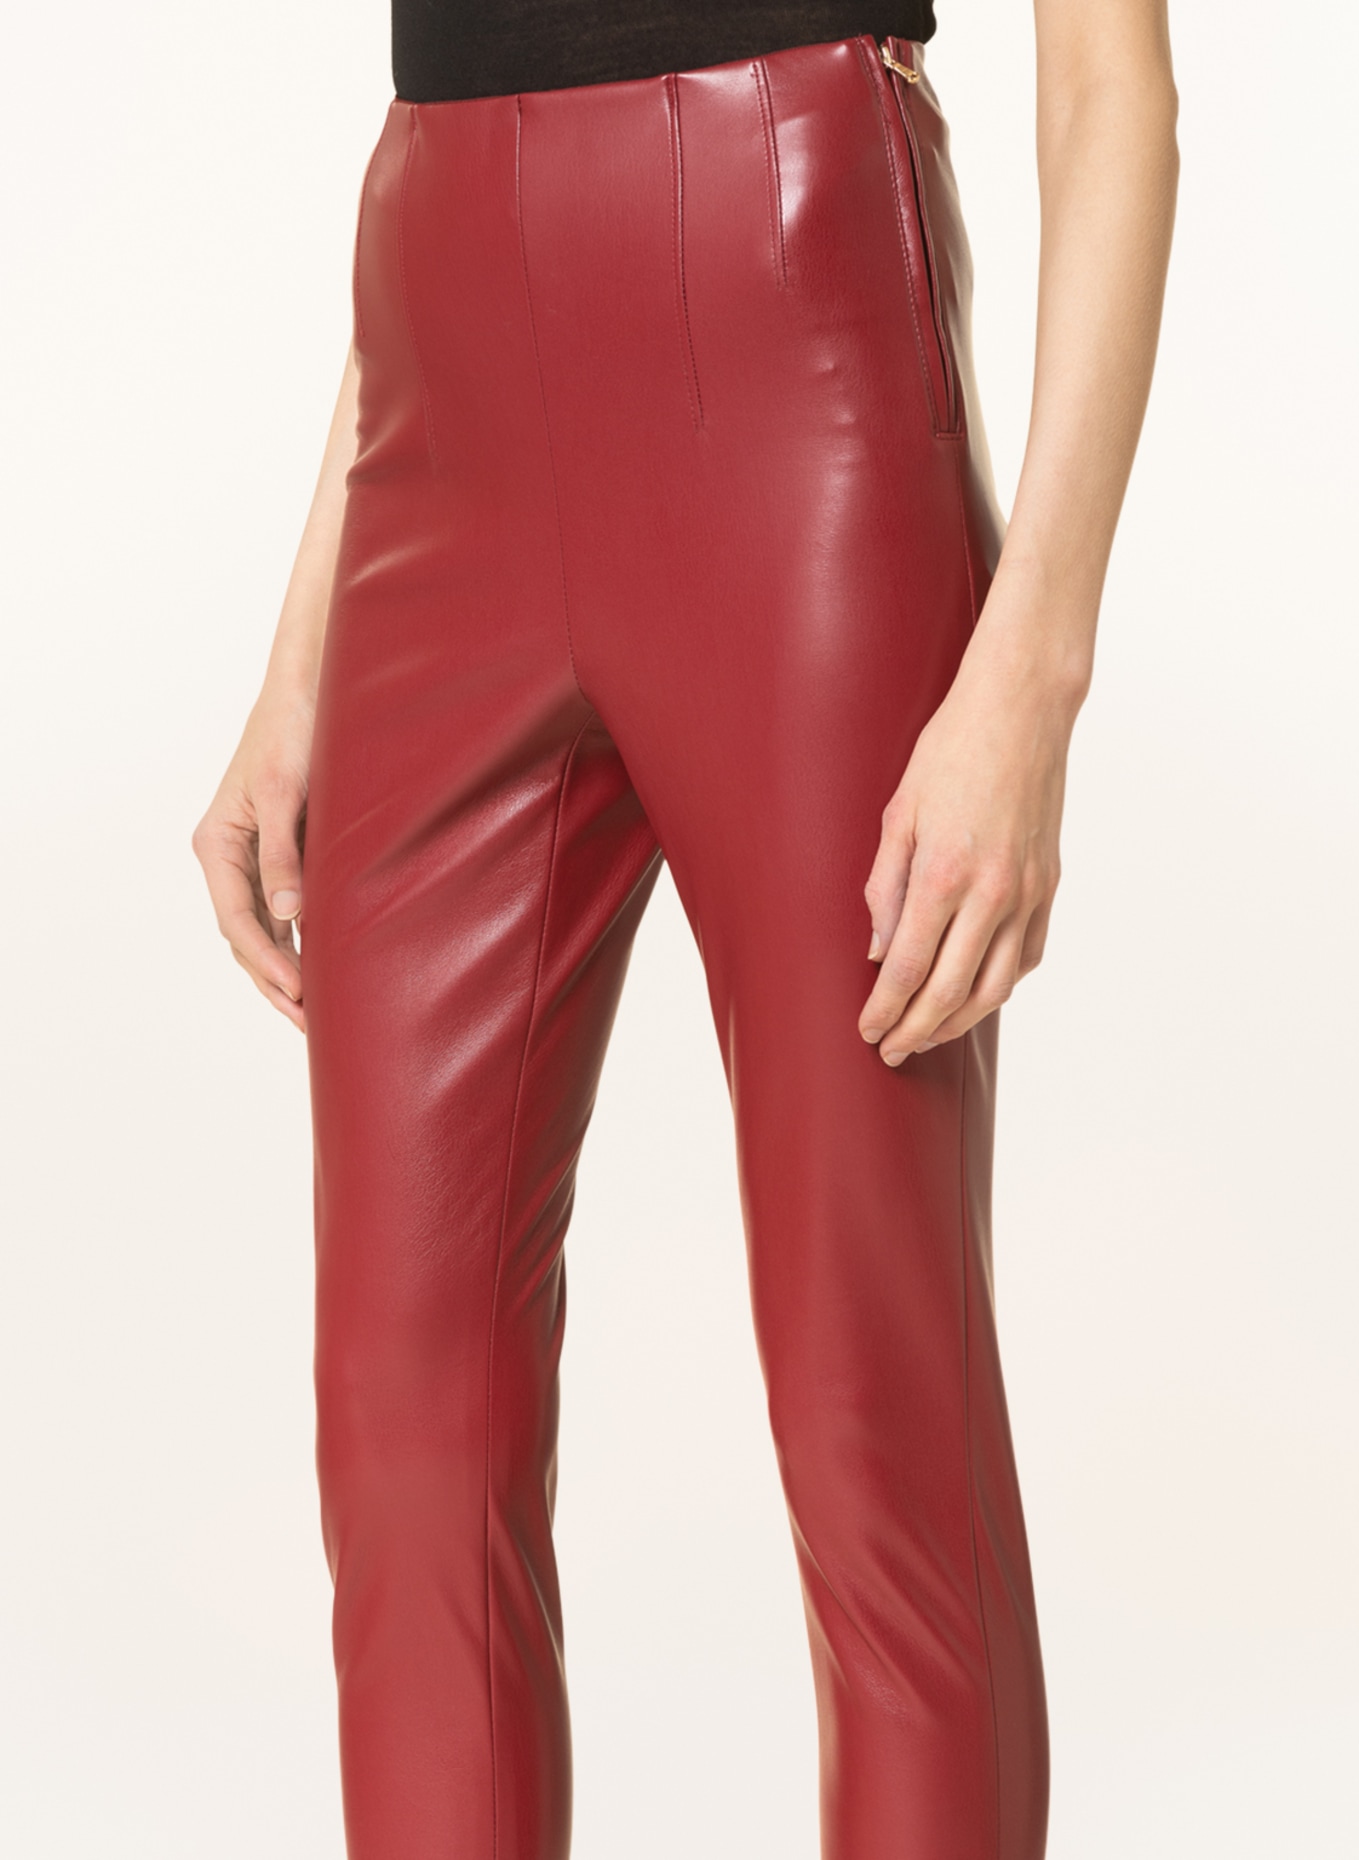 Fashion High Waist PU Leather Pants For Women Ladies Skinny Leggings Slim  Pants Casual Ladies Black Red Capris-Red @ Best Price Online | Jumia Kenya